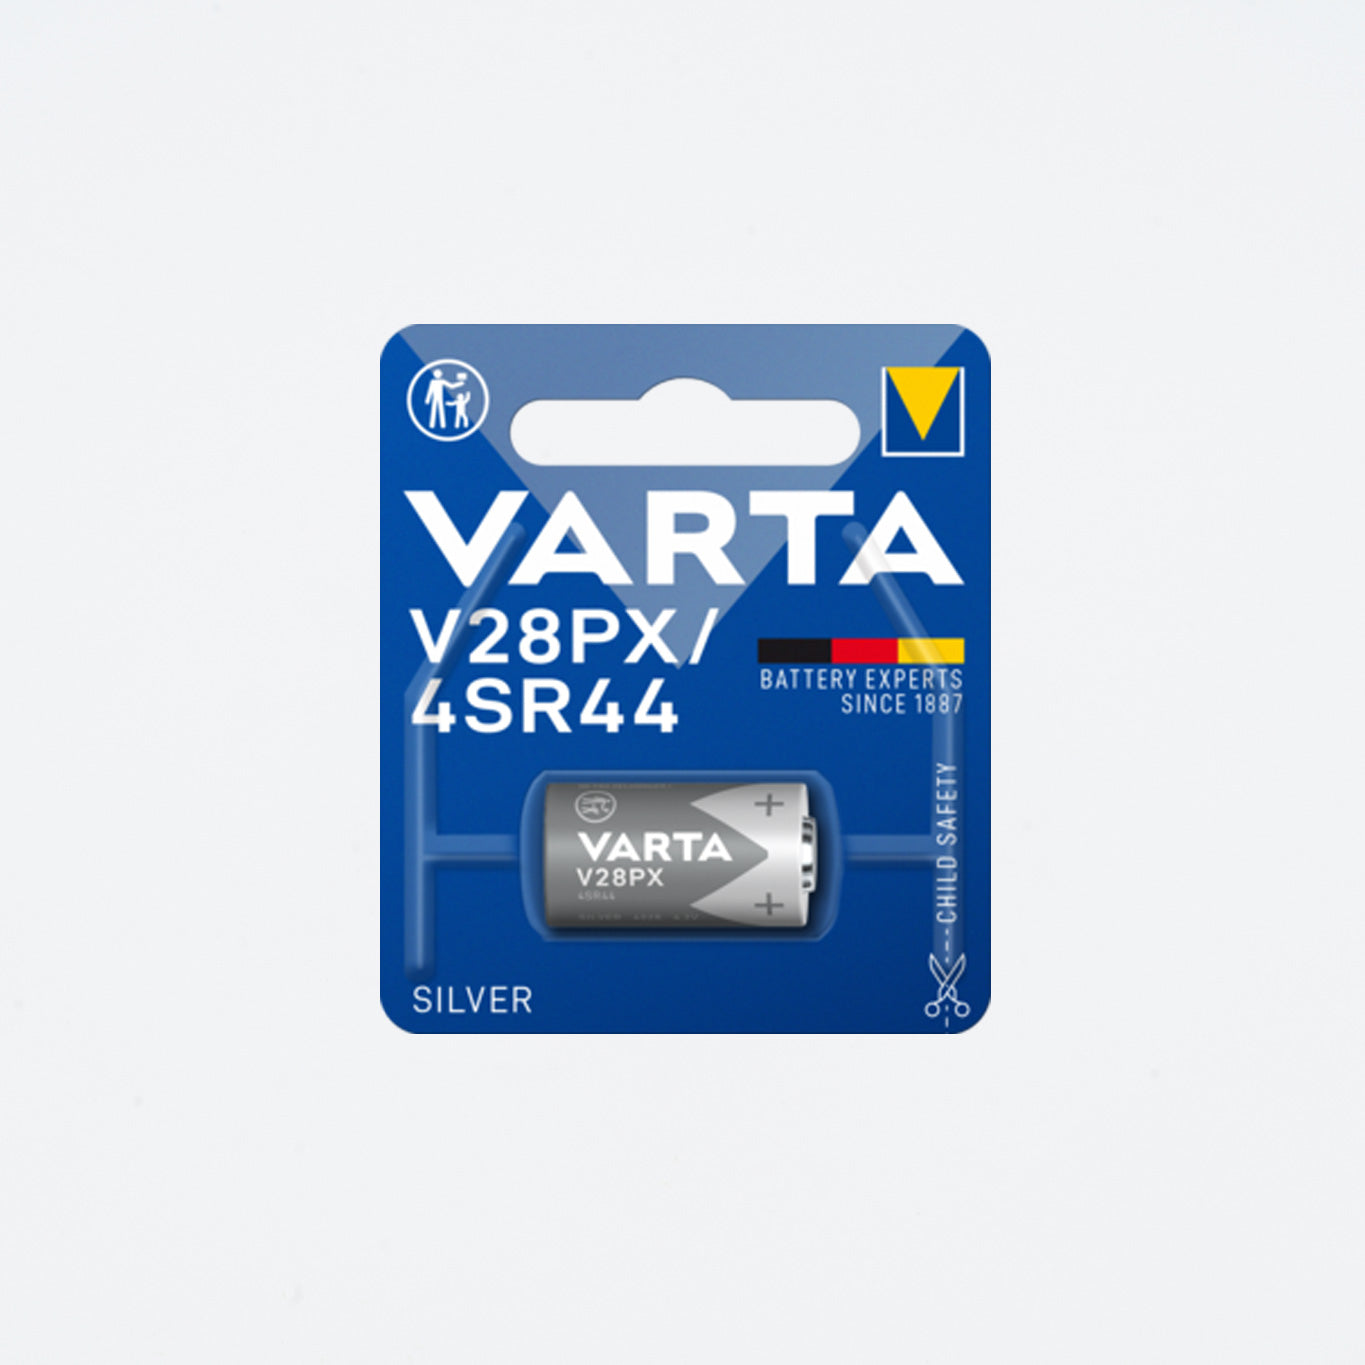 Varta V28PX/4SR44